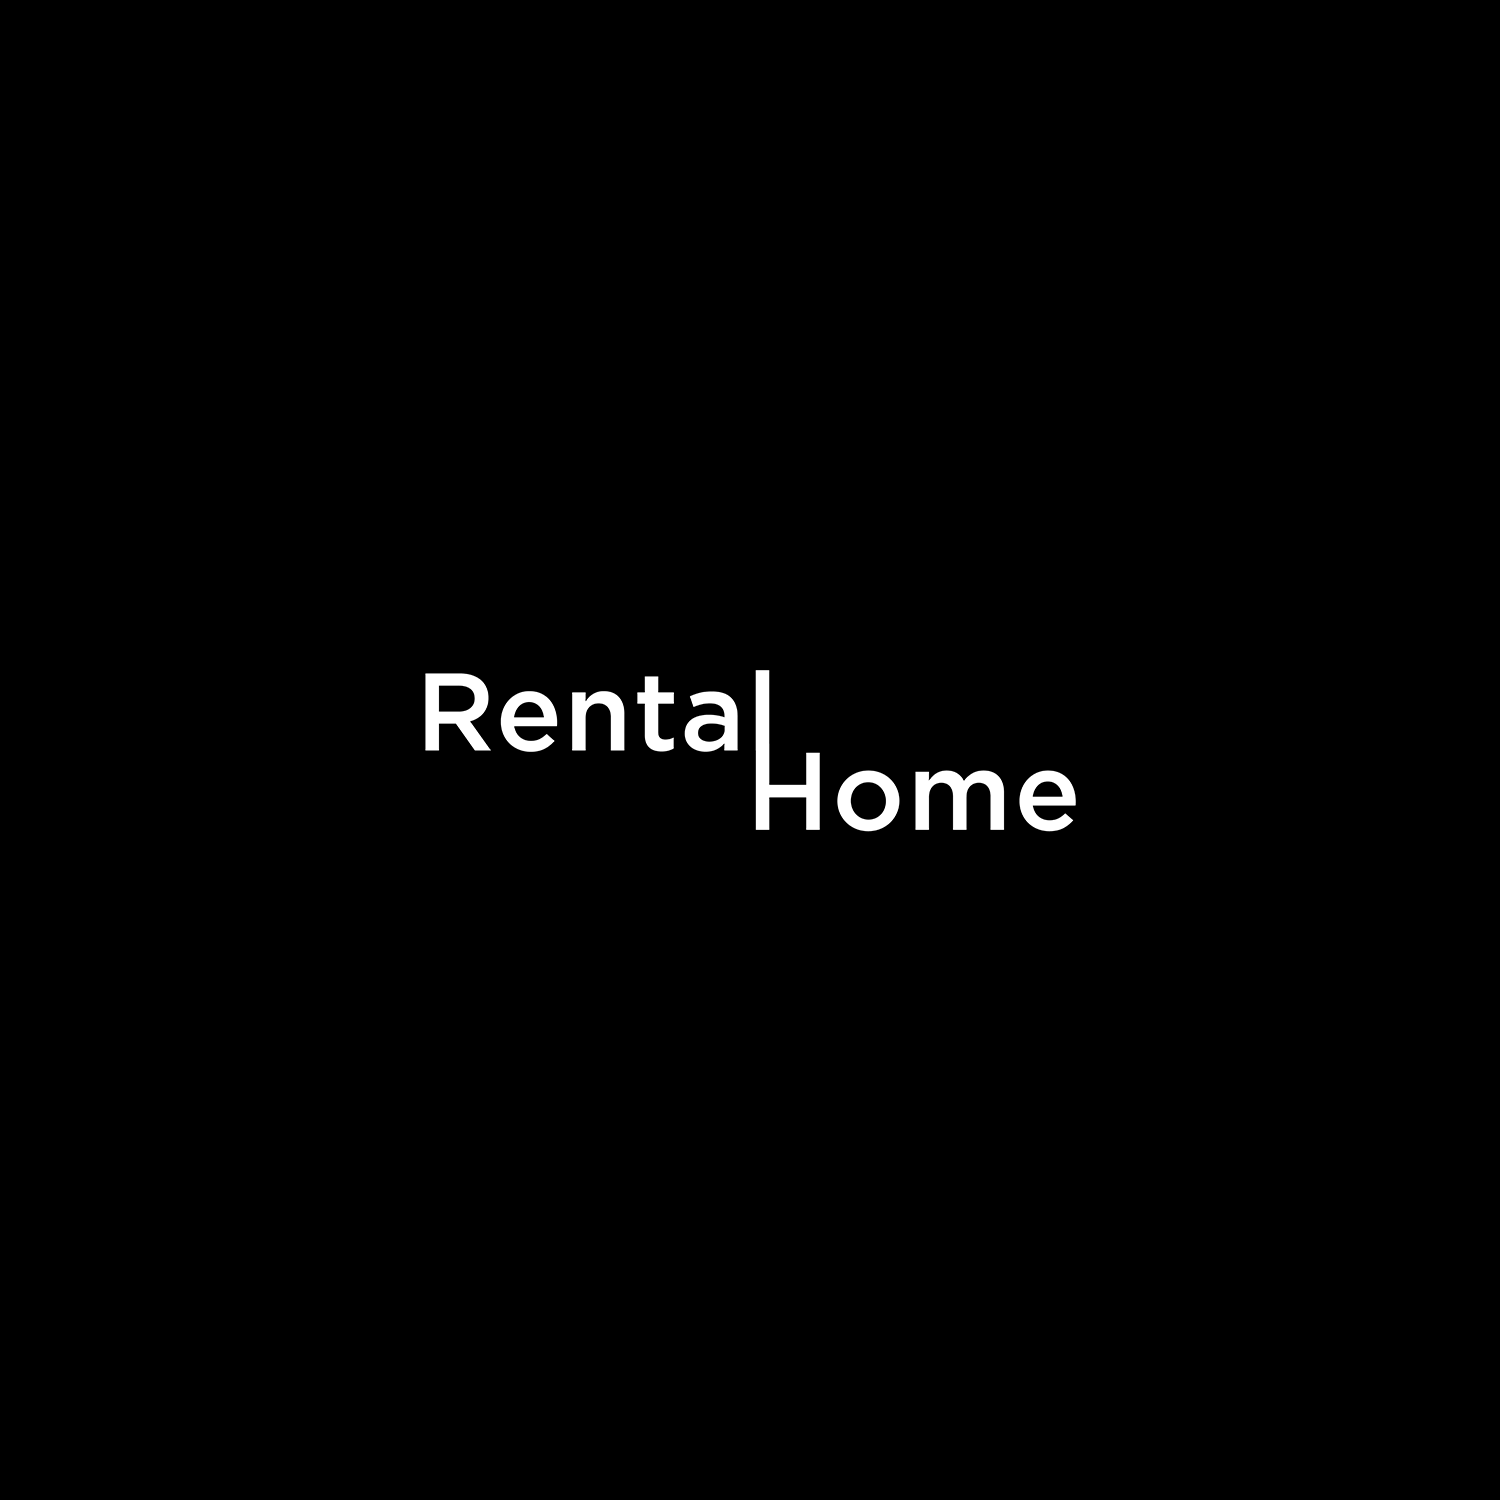 Rental Home